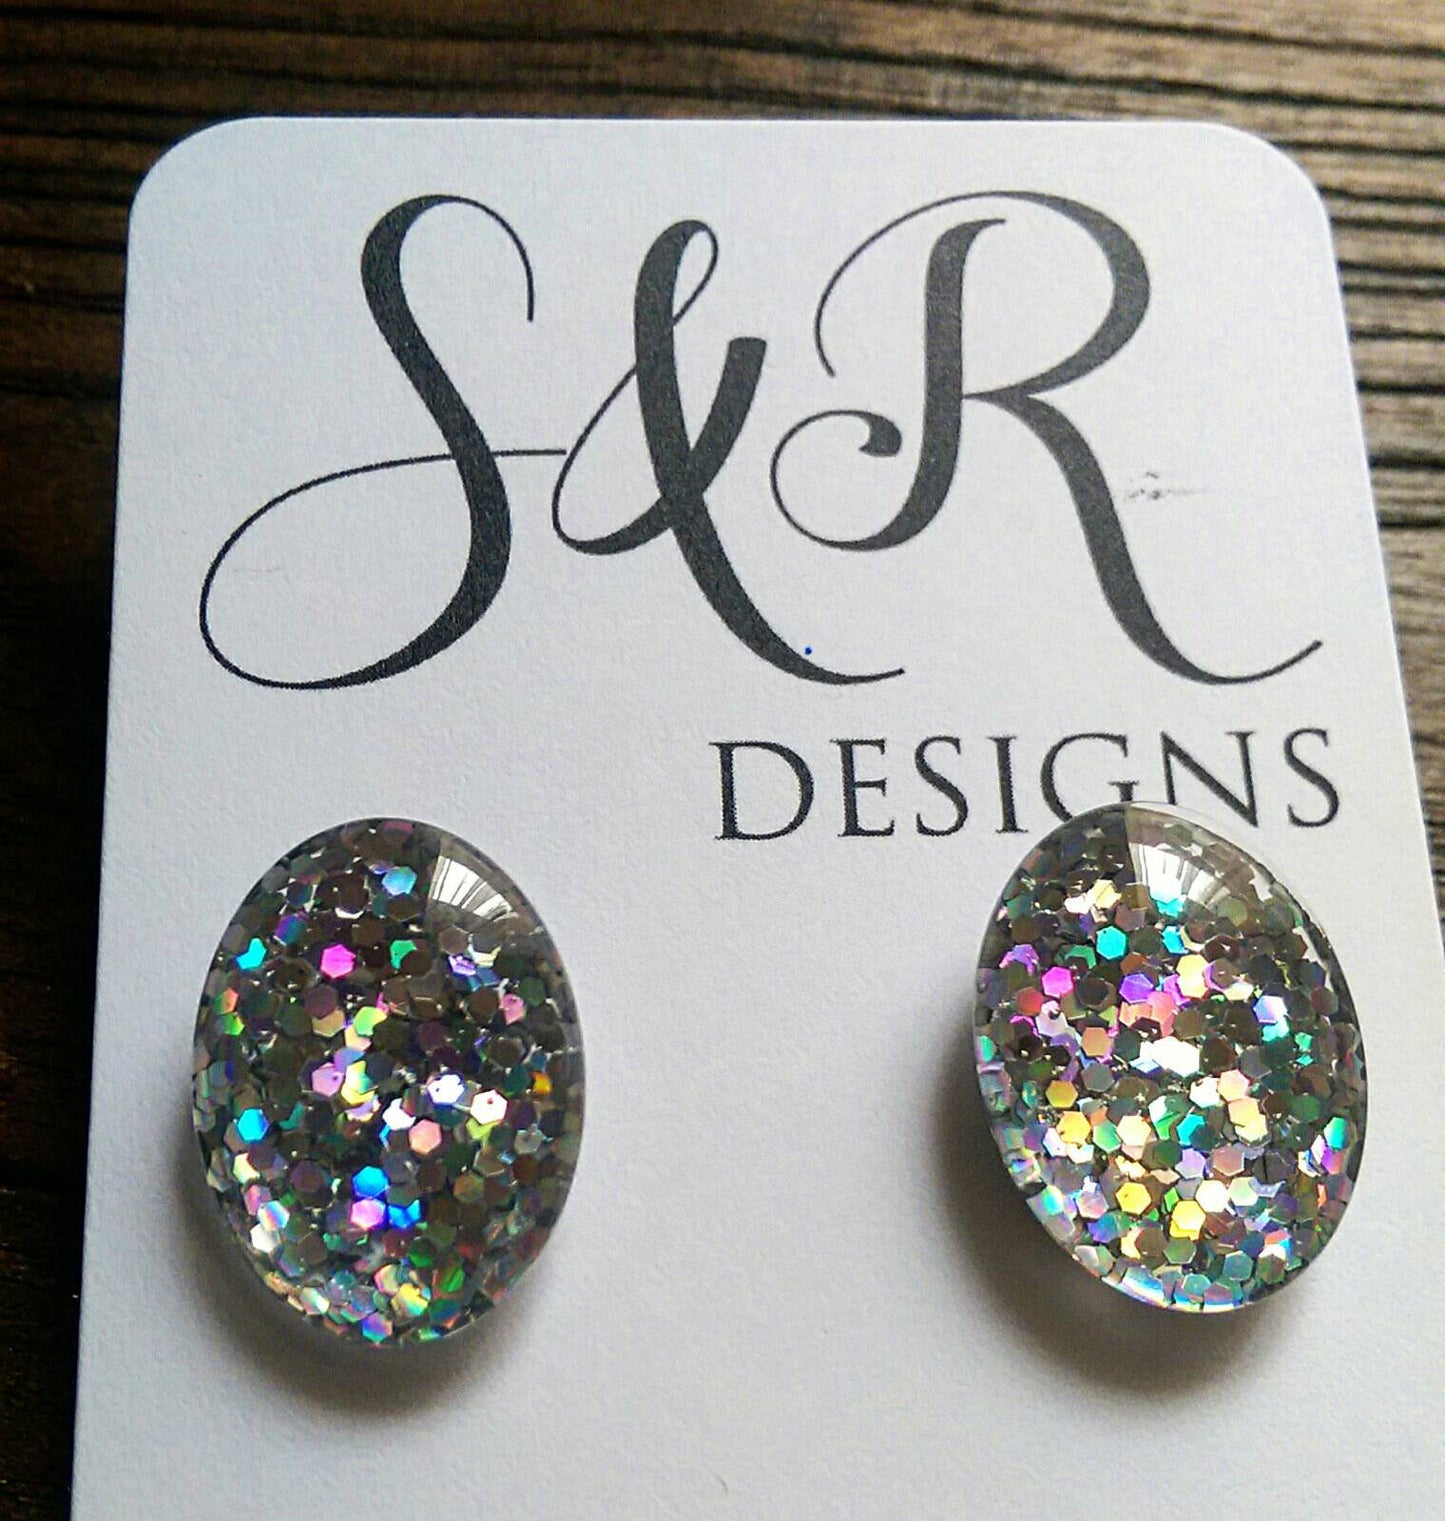 Oval Glass Glitter Resin Stud Earrings made of Stainless Steel, Silver Holographic Glitter Earrings